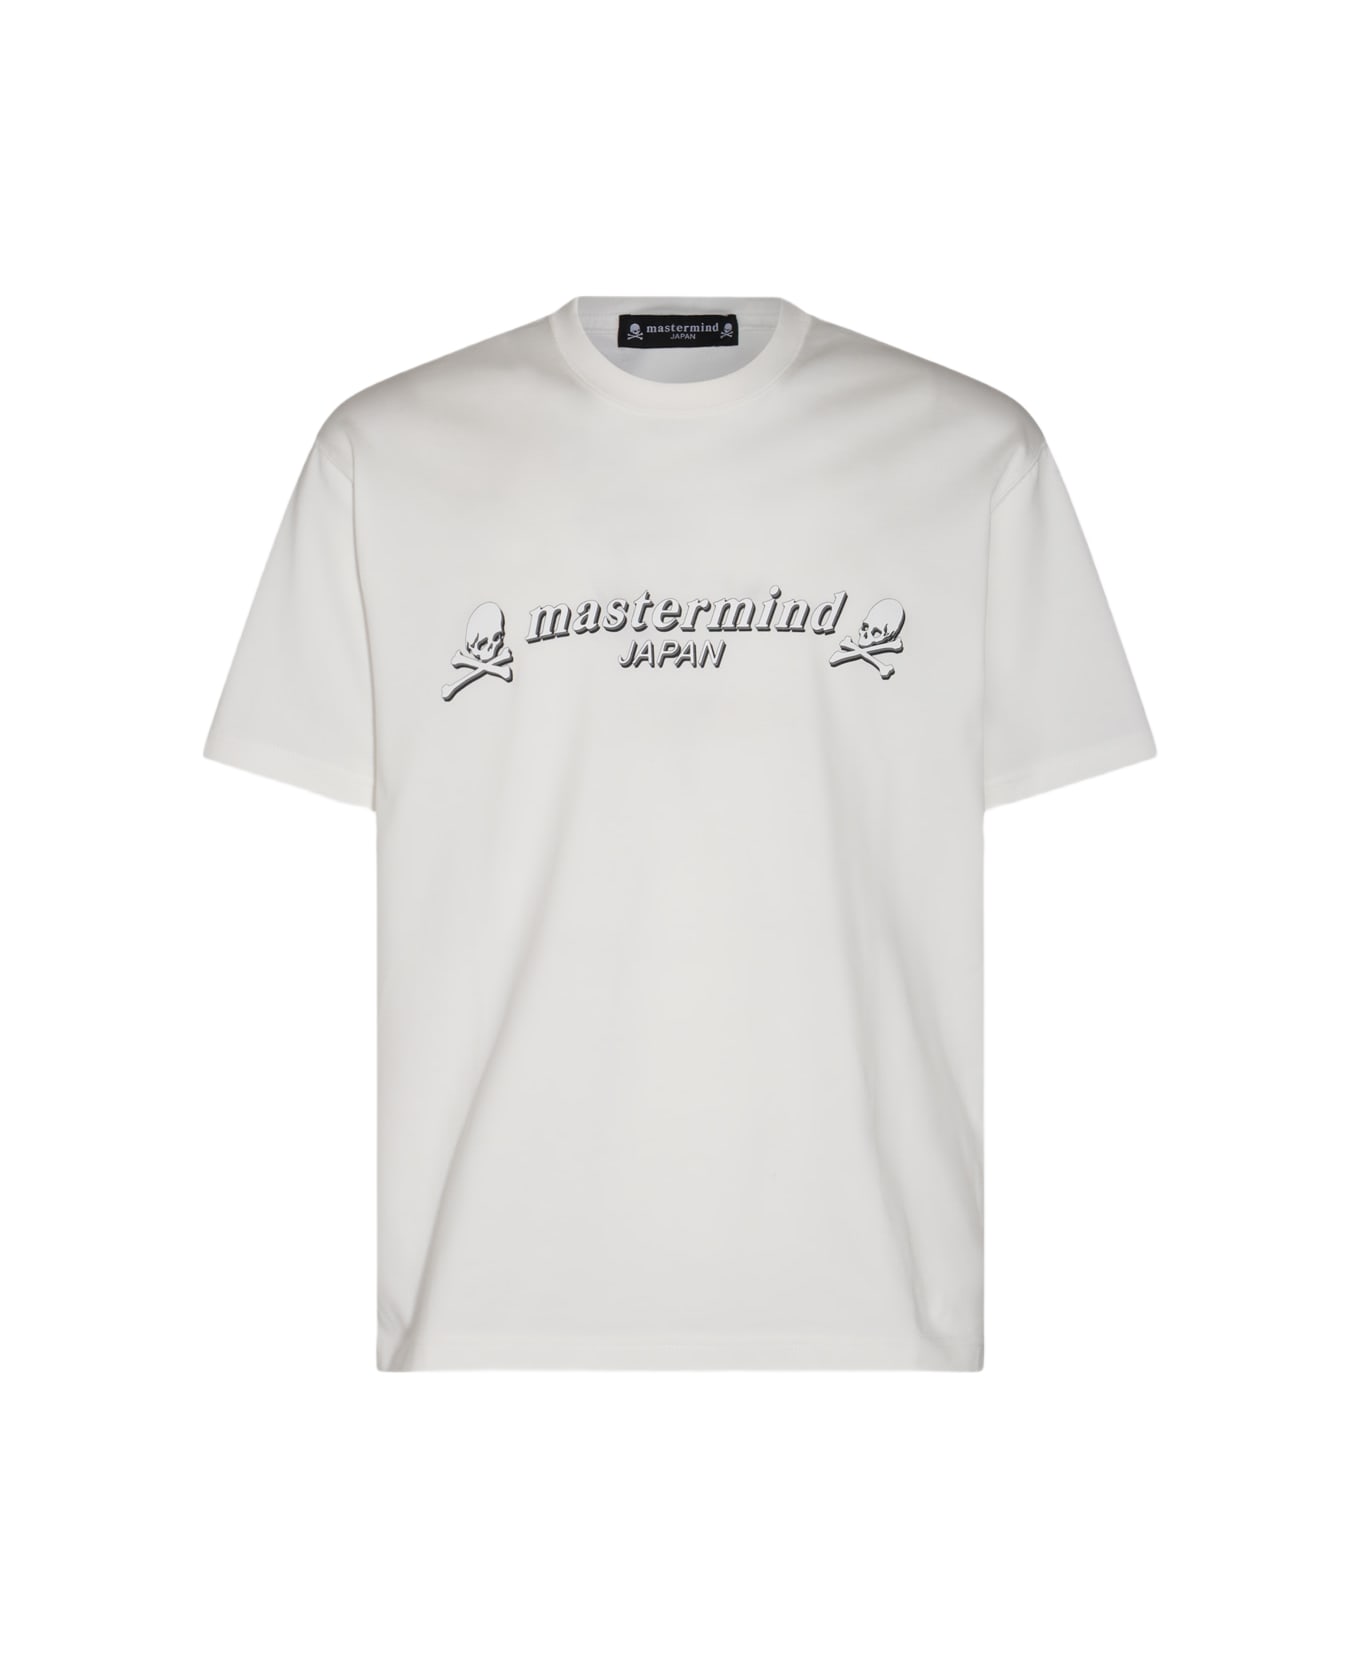 Mastermind Japan White And Black Cotton T-shirt - White